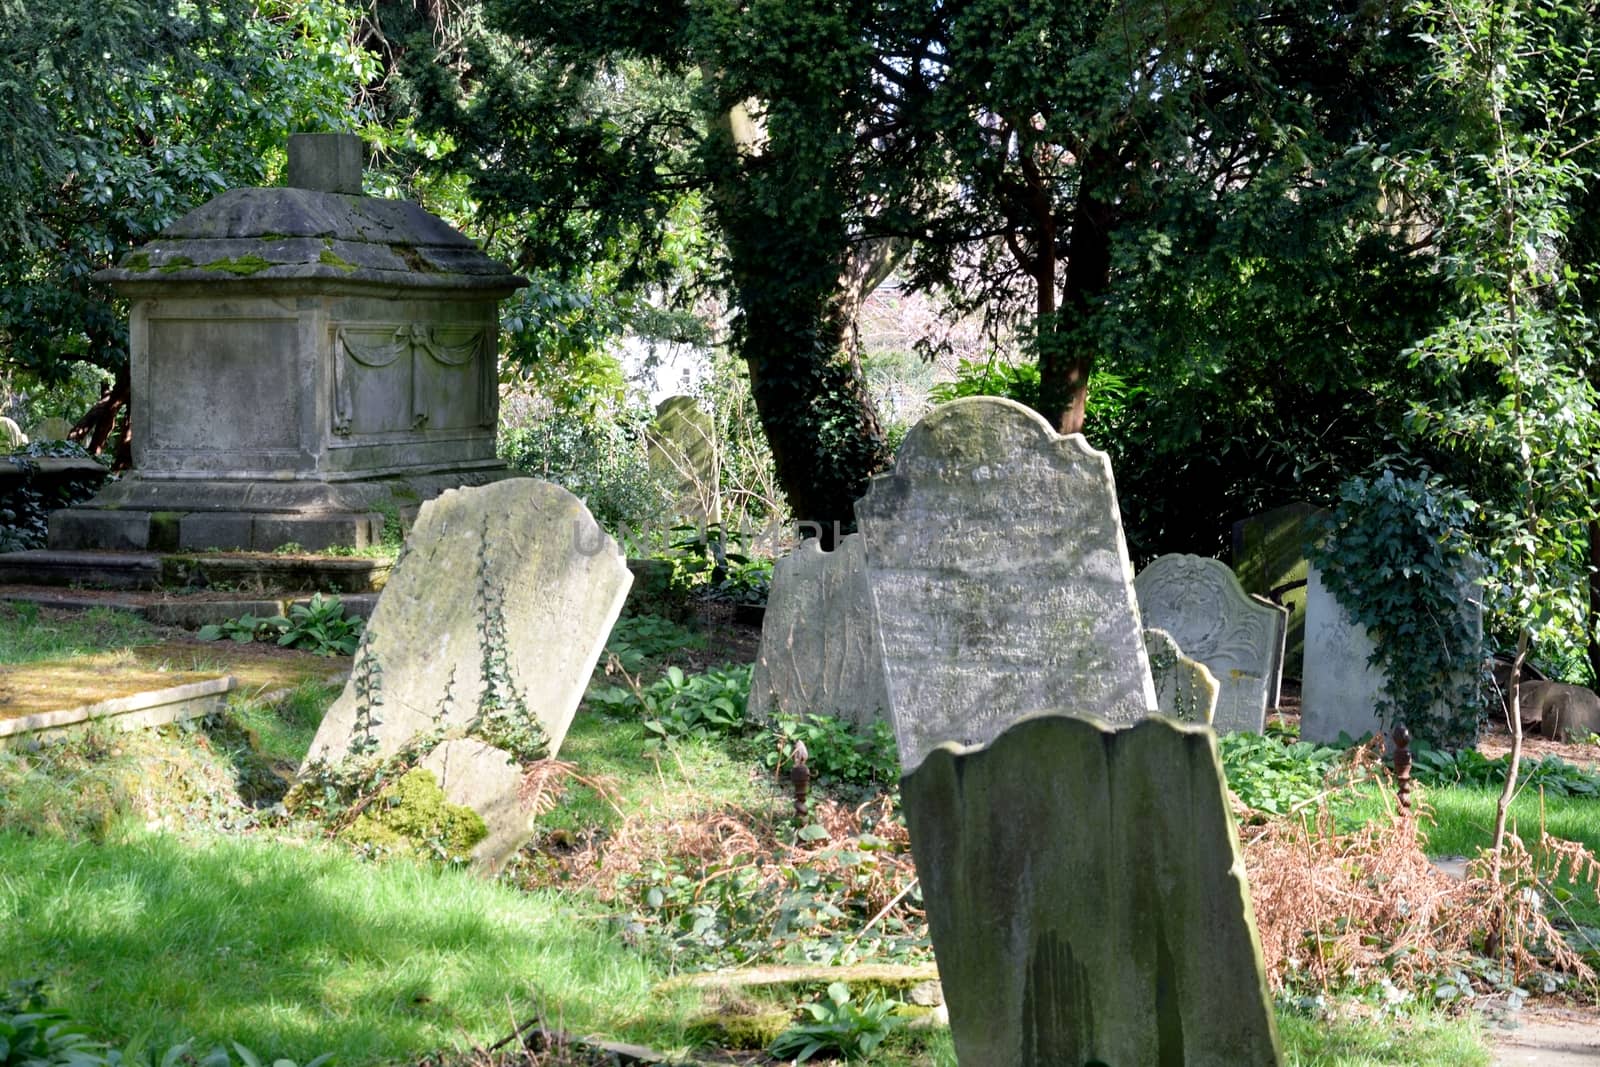 Tombstones in ancient English graveyard